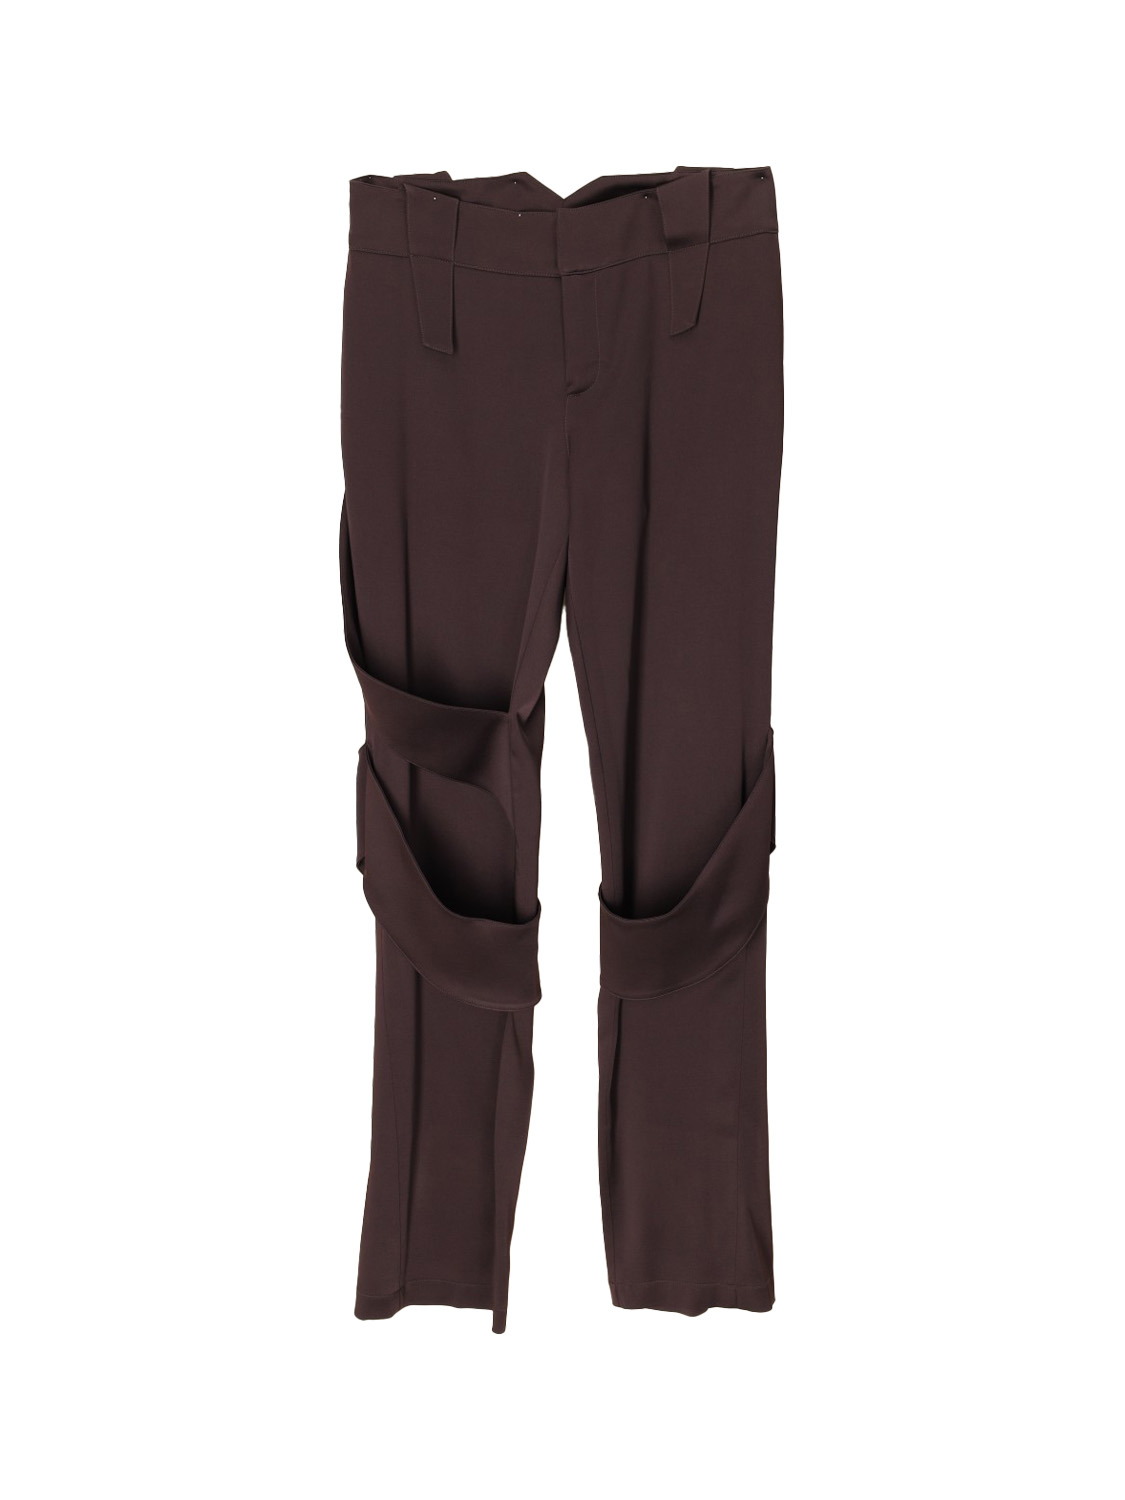 Blumarine Satin pants with layer details  brown 34